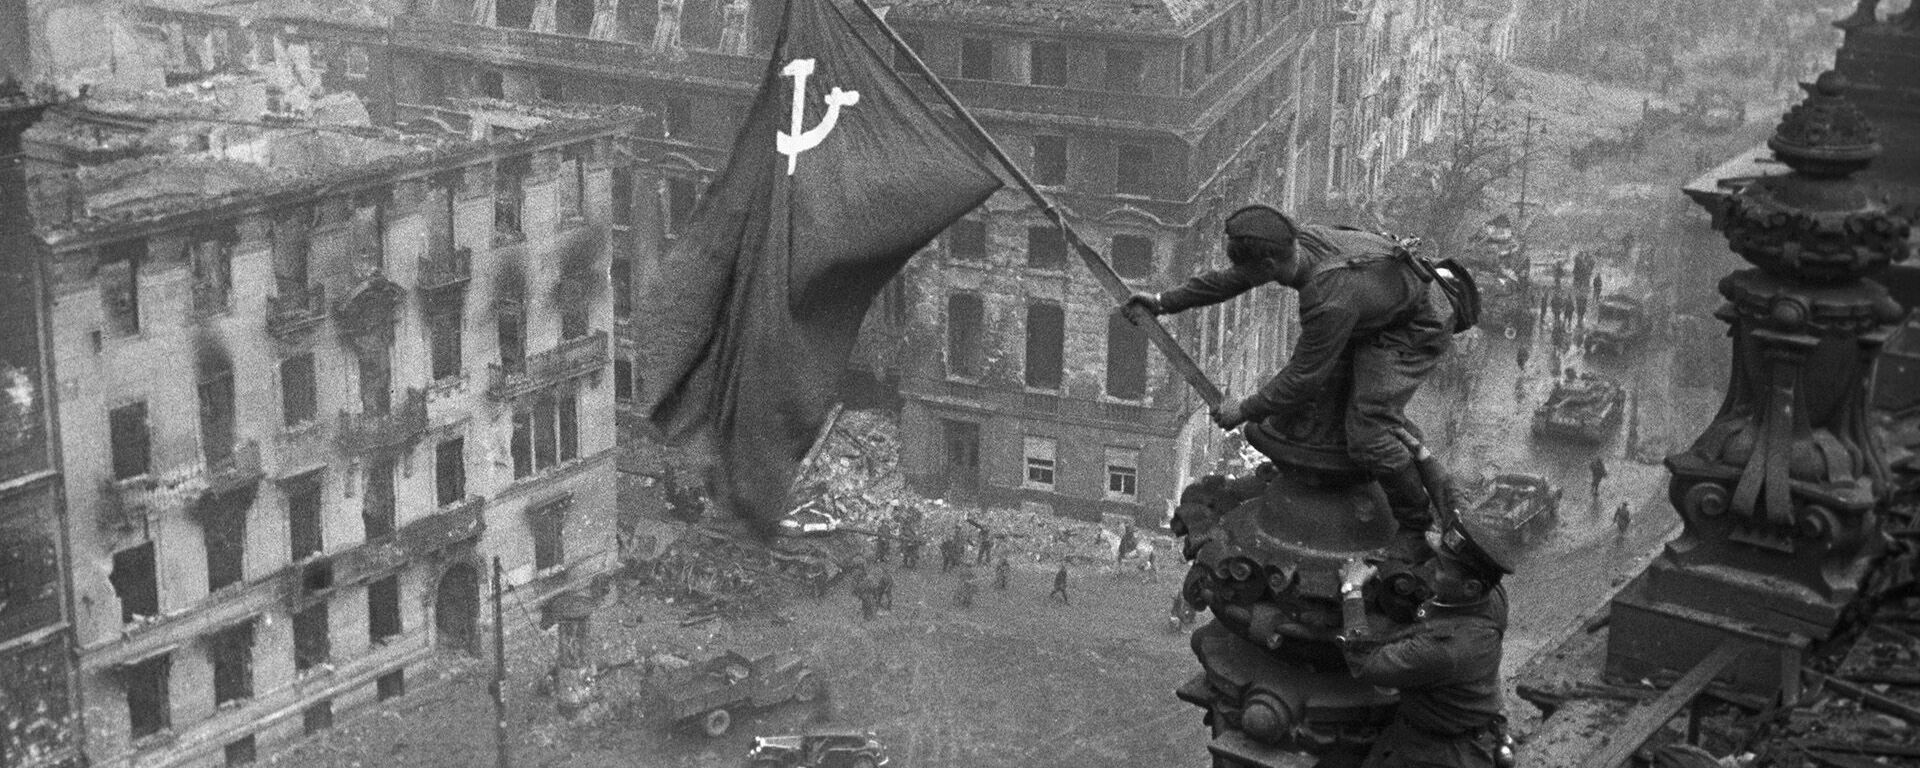 Фото воздвижение флага над рейхстагом